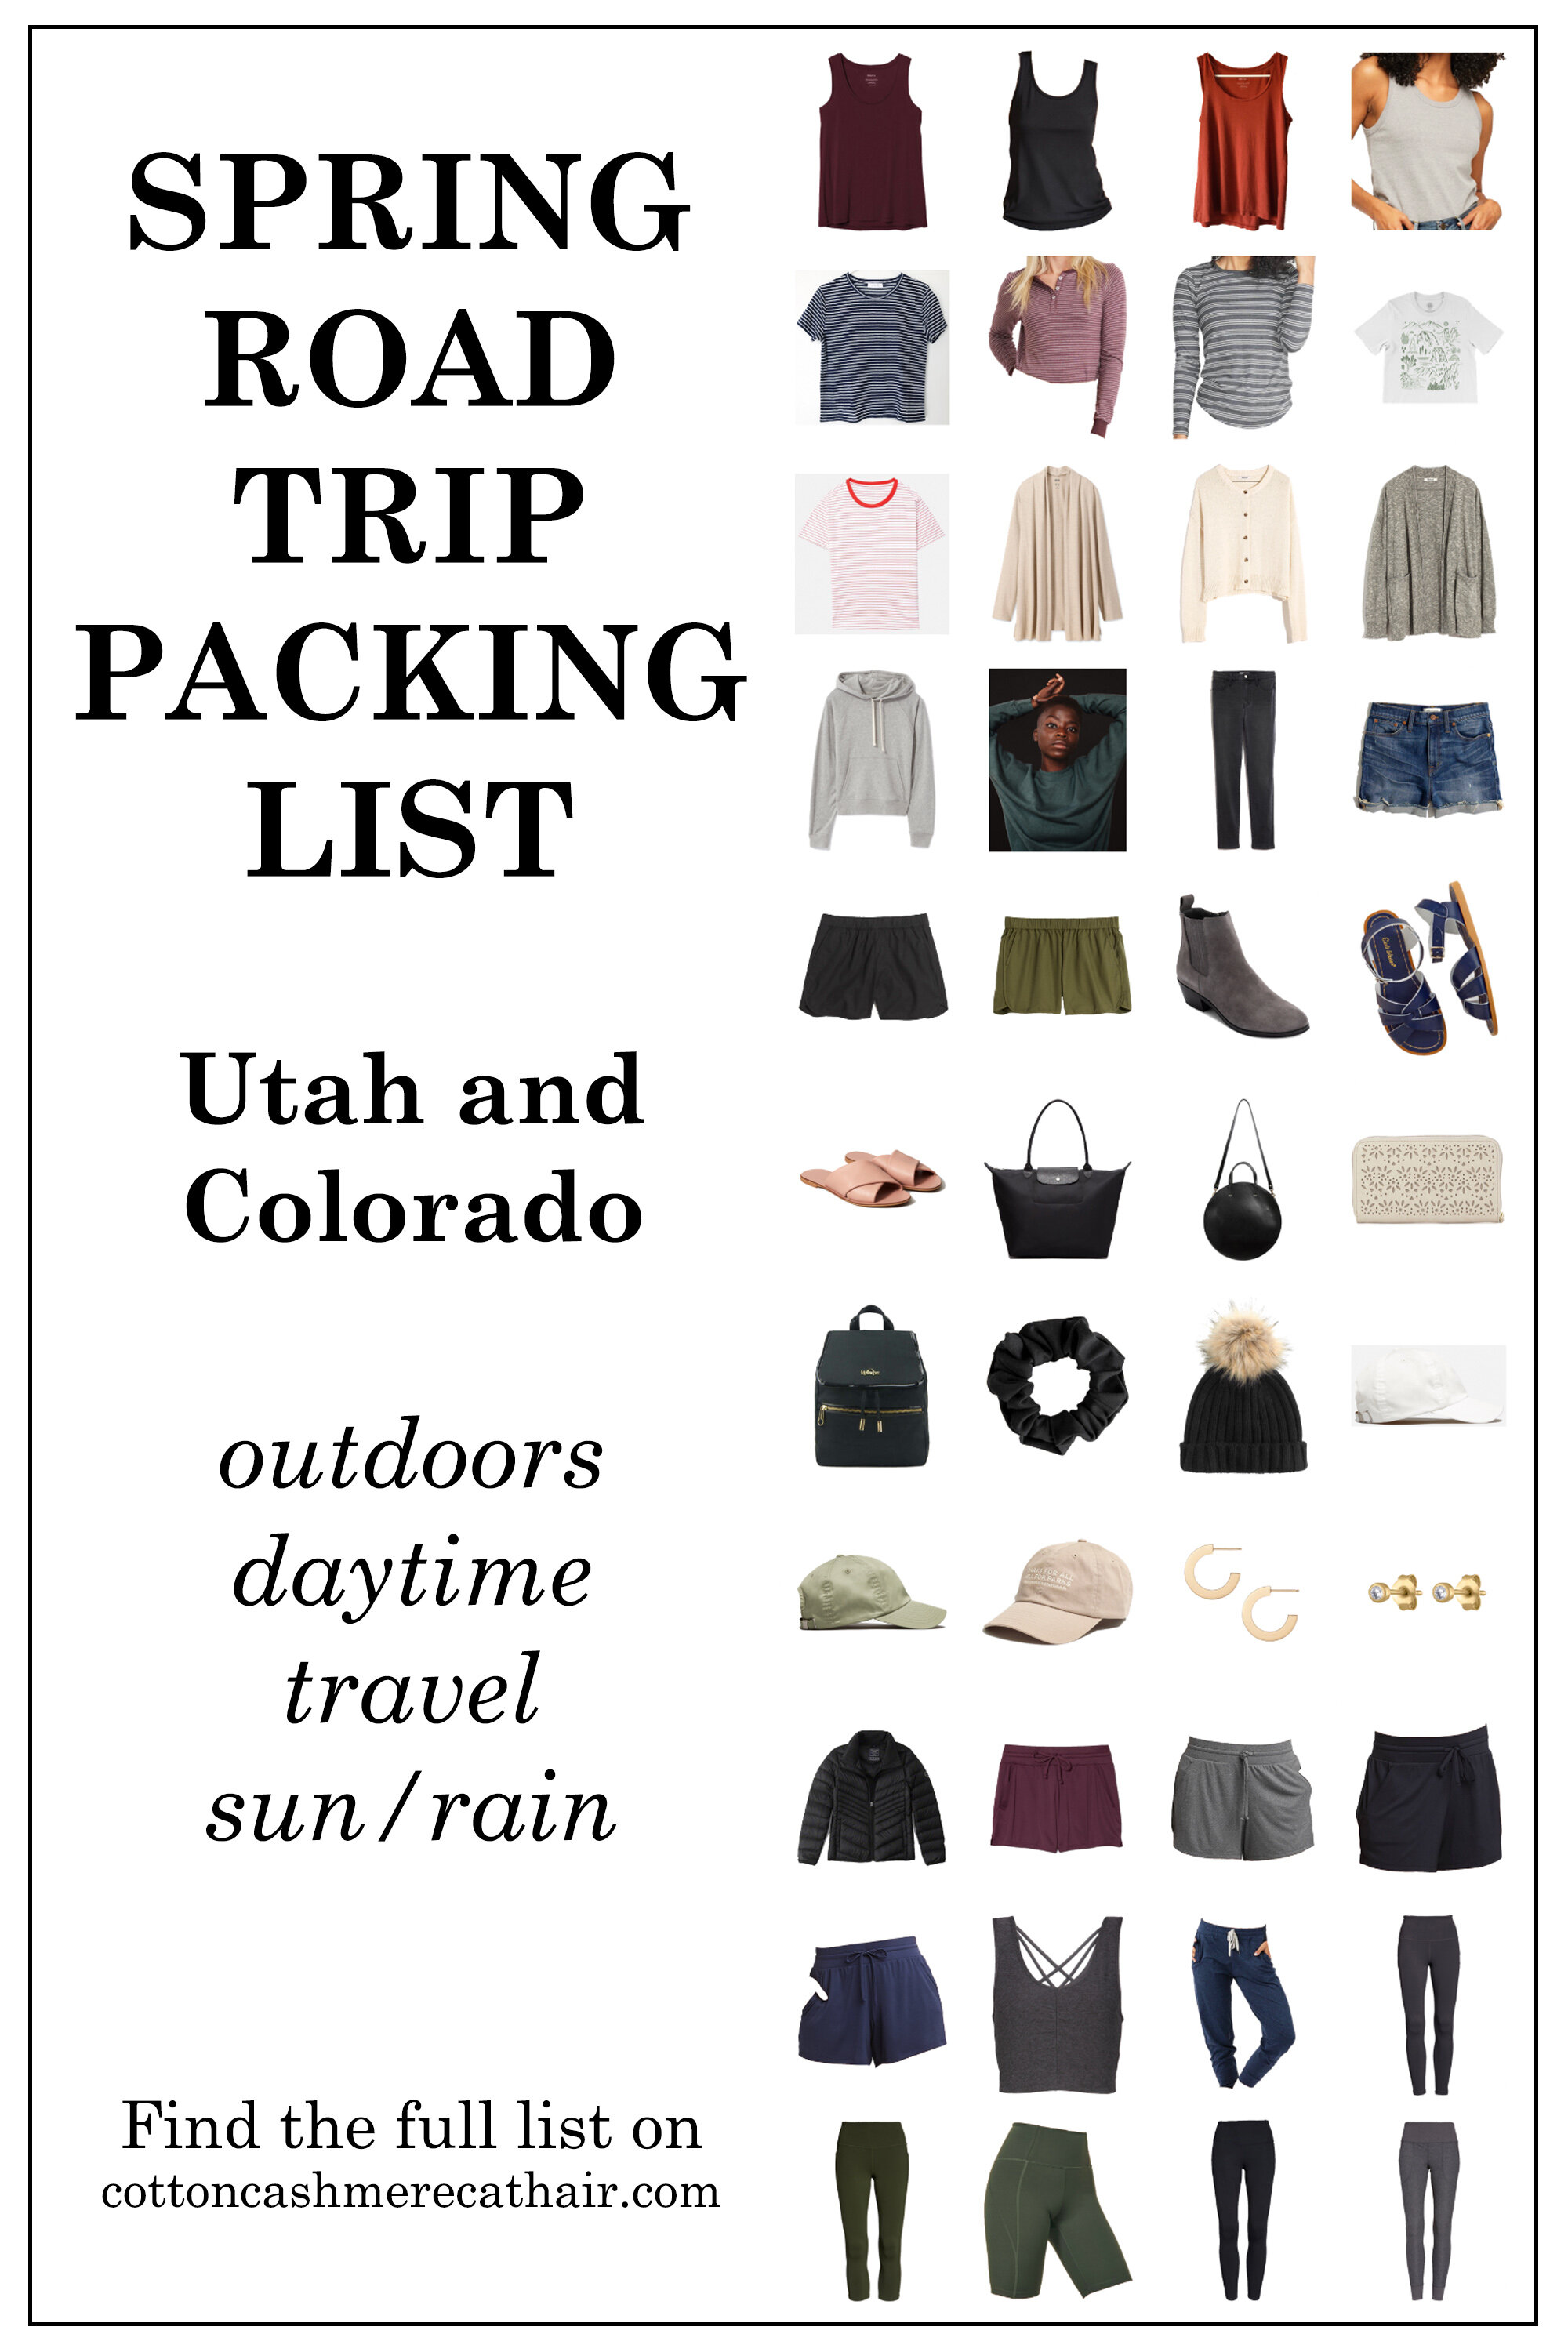 How To Pack For A Desert Road Trip - AskMen